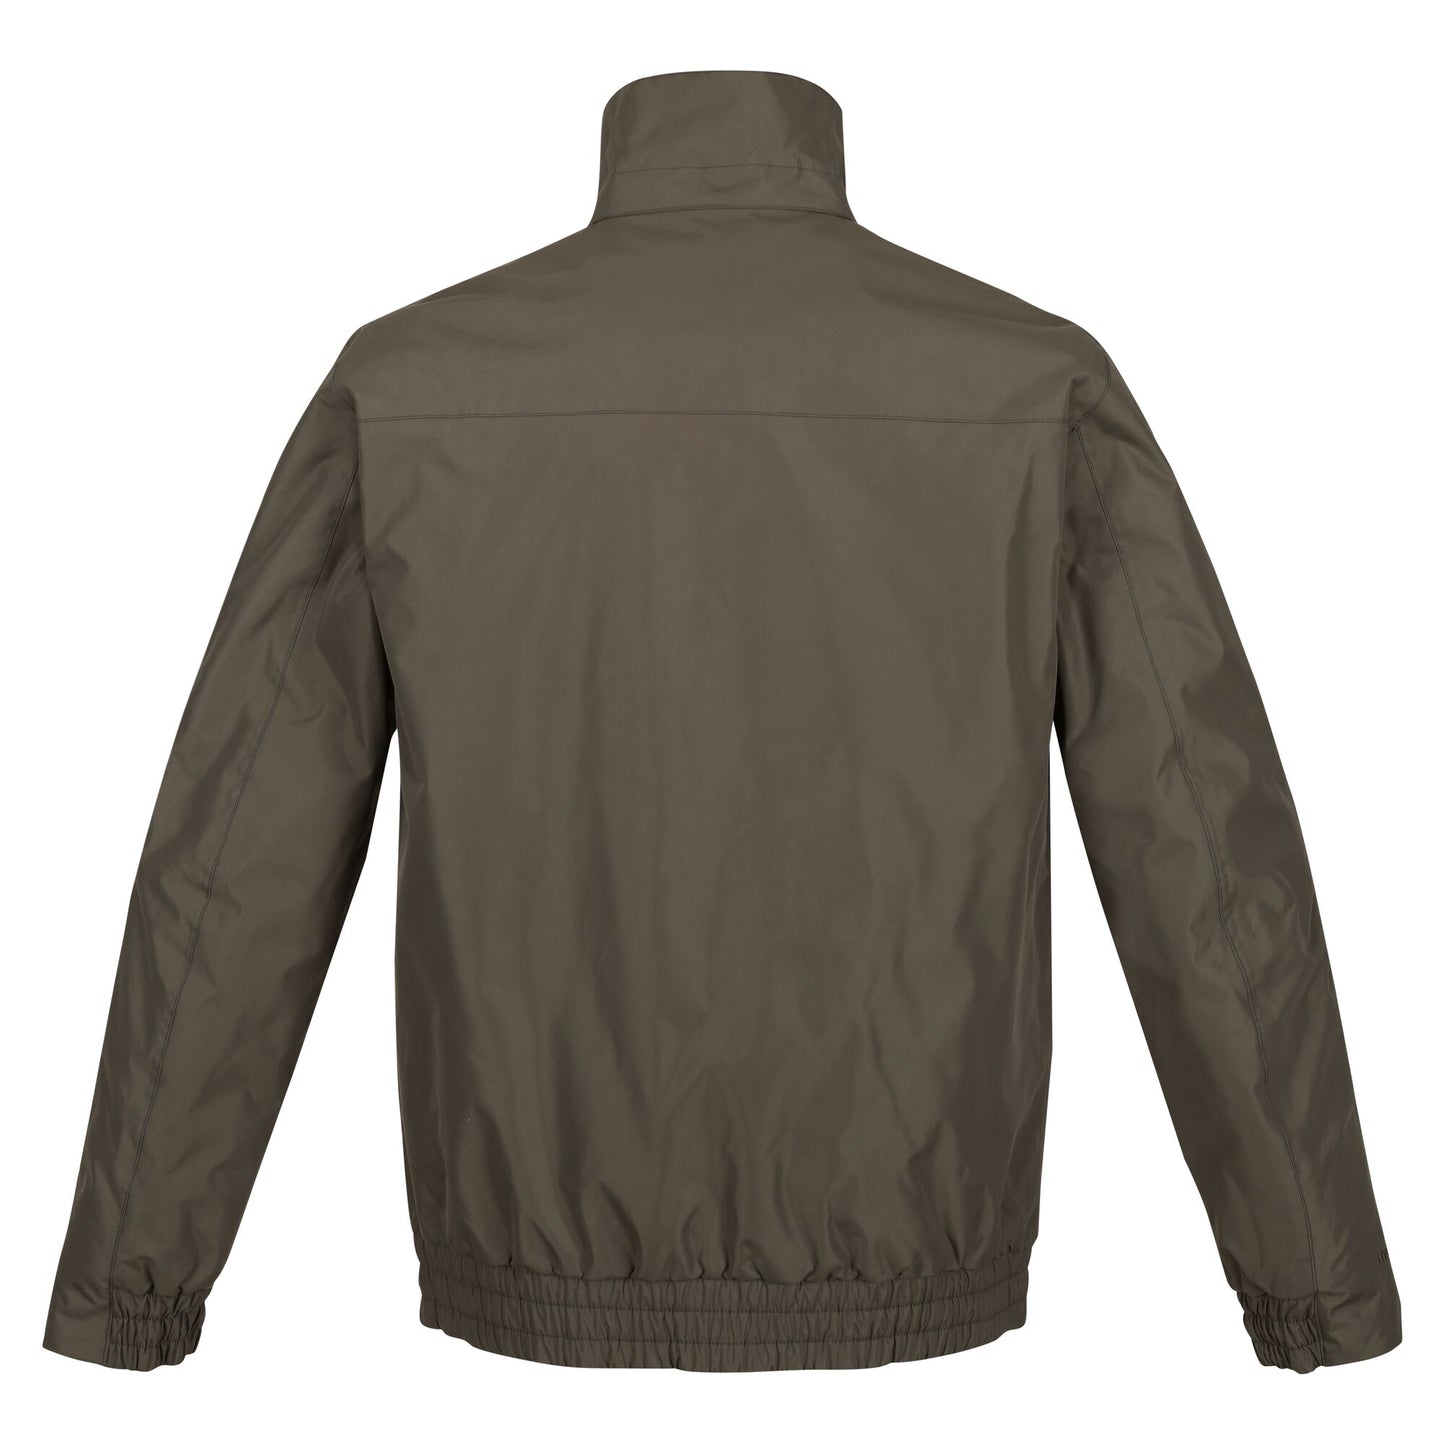 Regatta Men's Raynor Waterproof Jacket - Dark Khaki